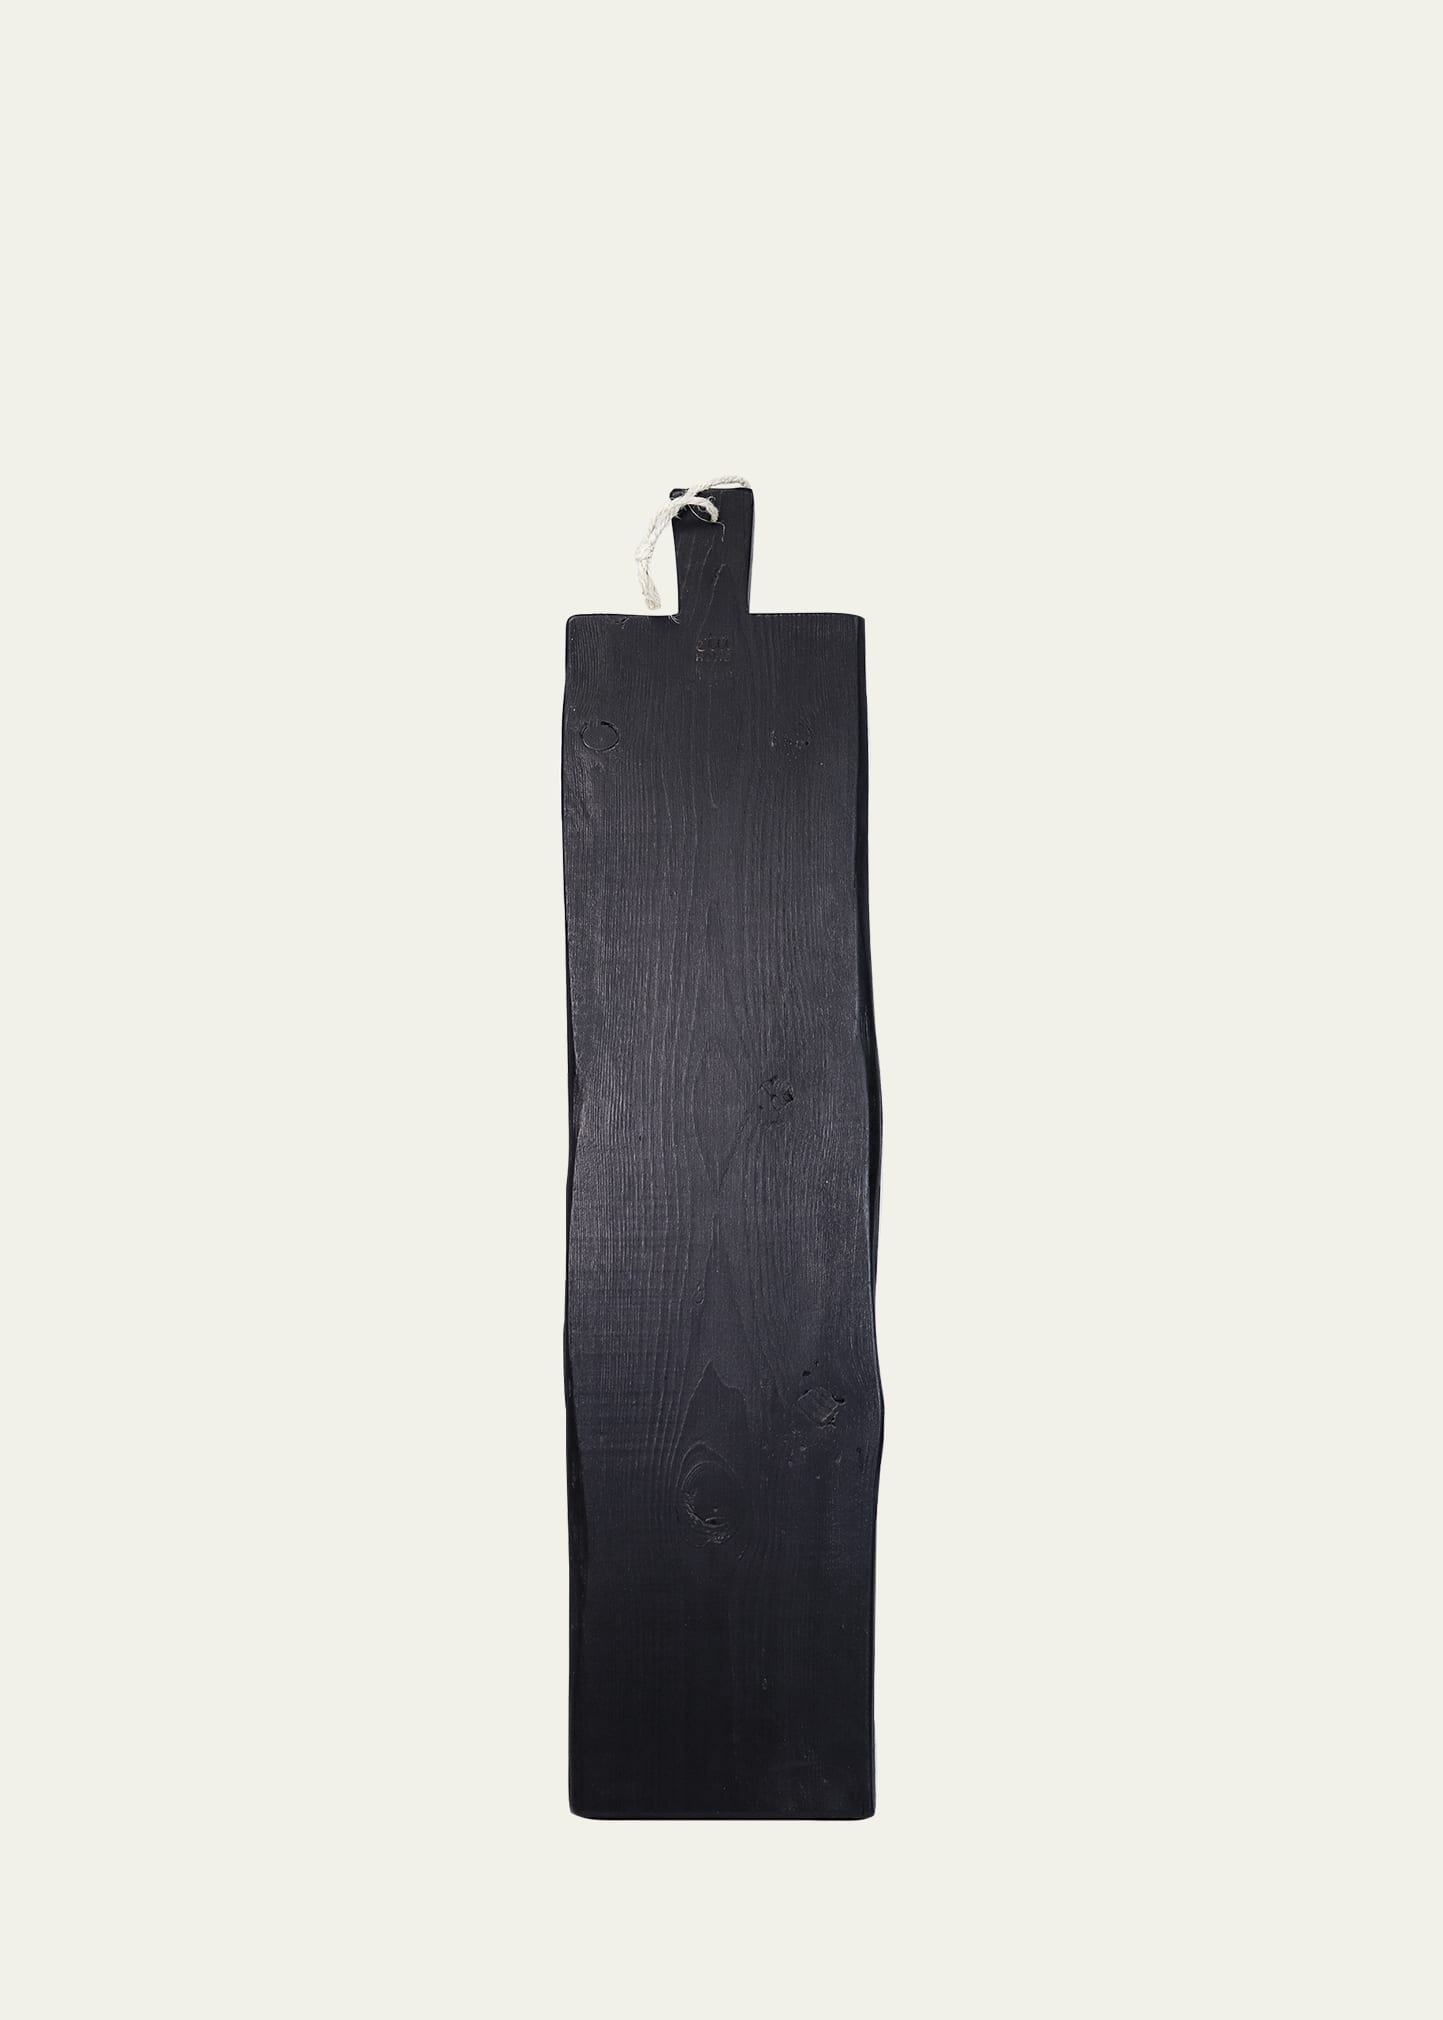 Etúhome Brasserie Large Plank, 40" In Black